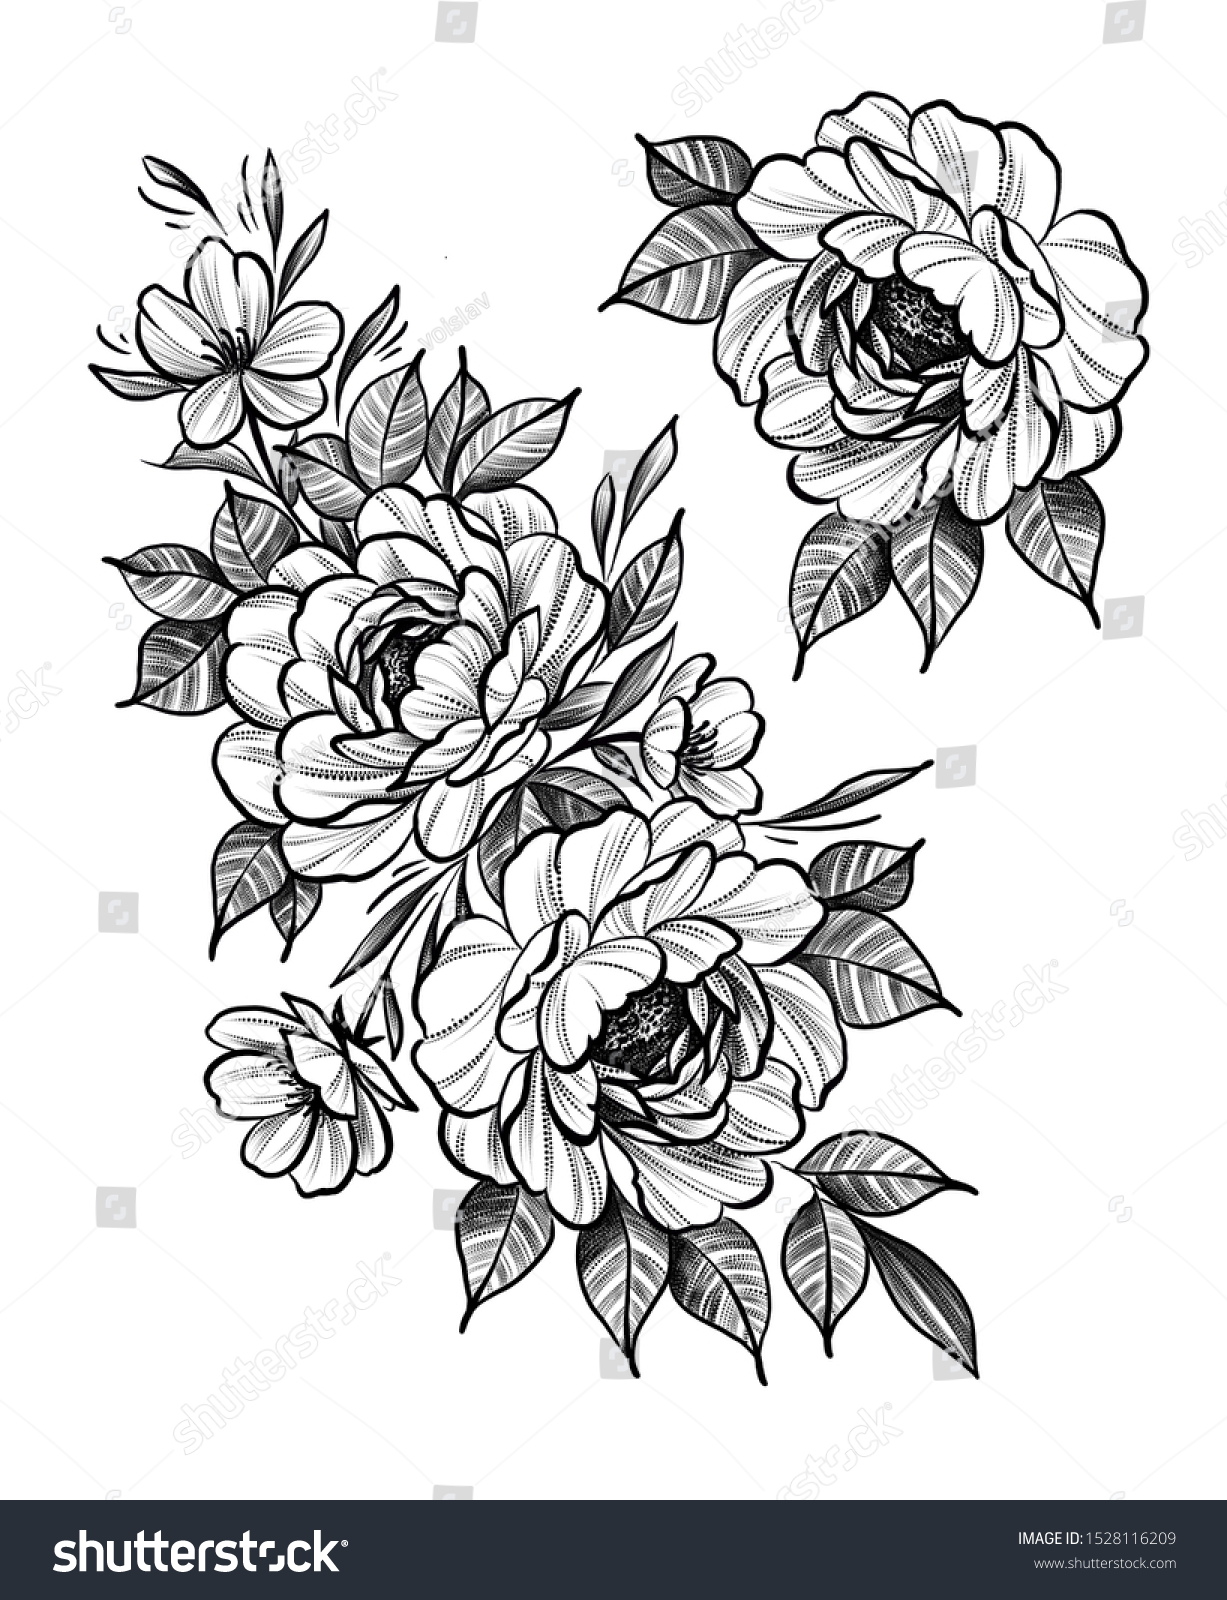 Beautiful Flowers Drawing Sketch Tattoo Design Stock Illustration 1528116209,Japanese Cherry Blossom Festival Dc